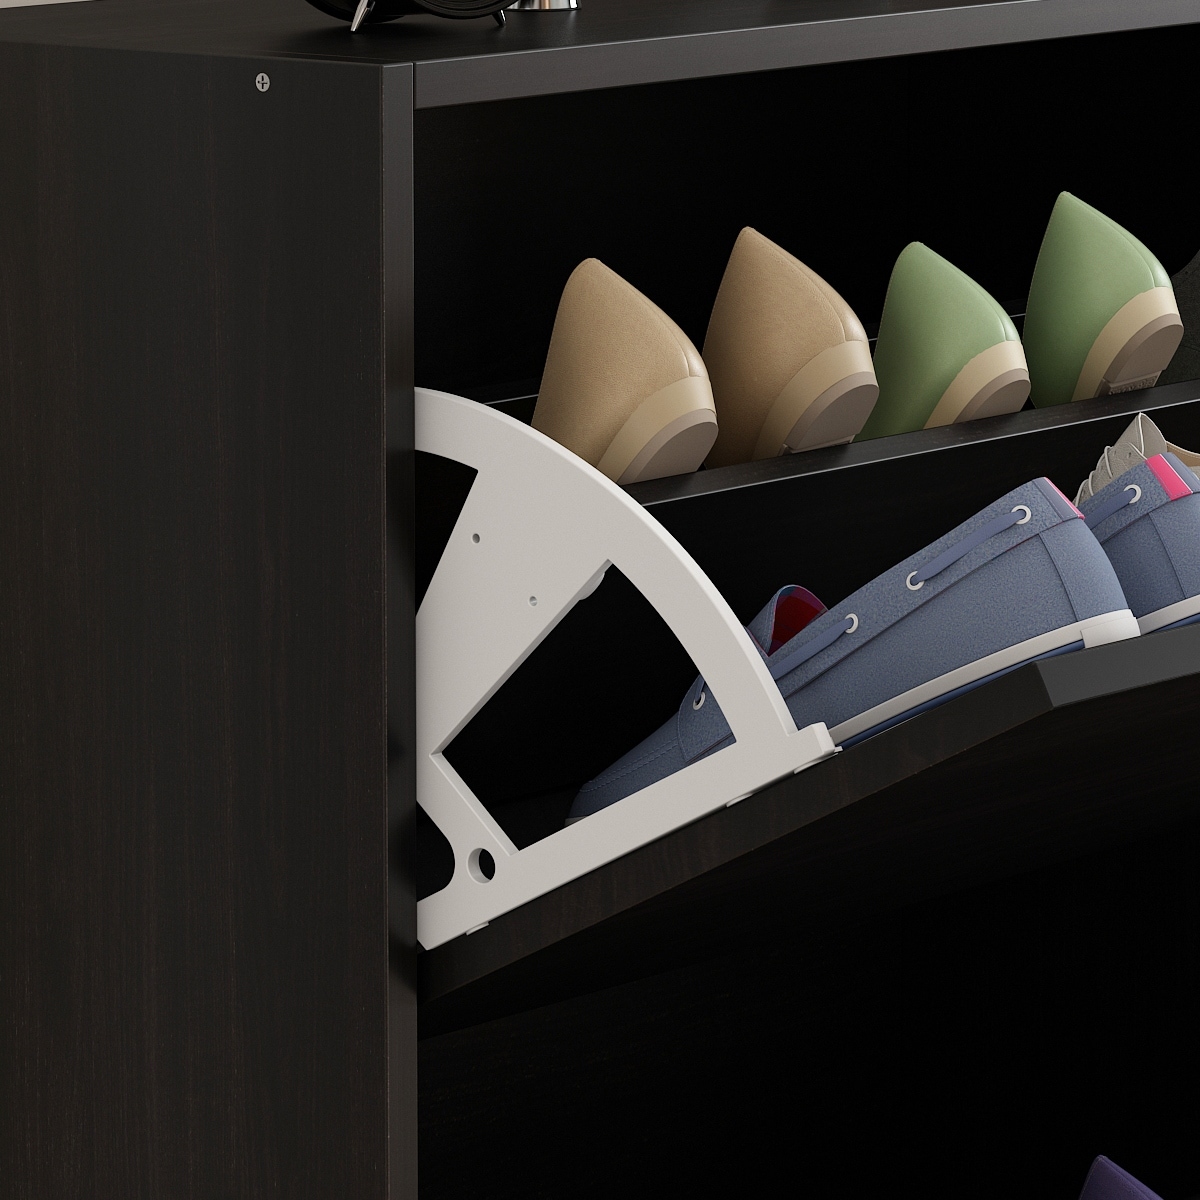 Portable Shoe Rack Organizer 66-72 Pair Tower Shelf Storage Cabinet -  12-tiers - Bed Bath & Beyond - 35474849